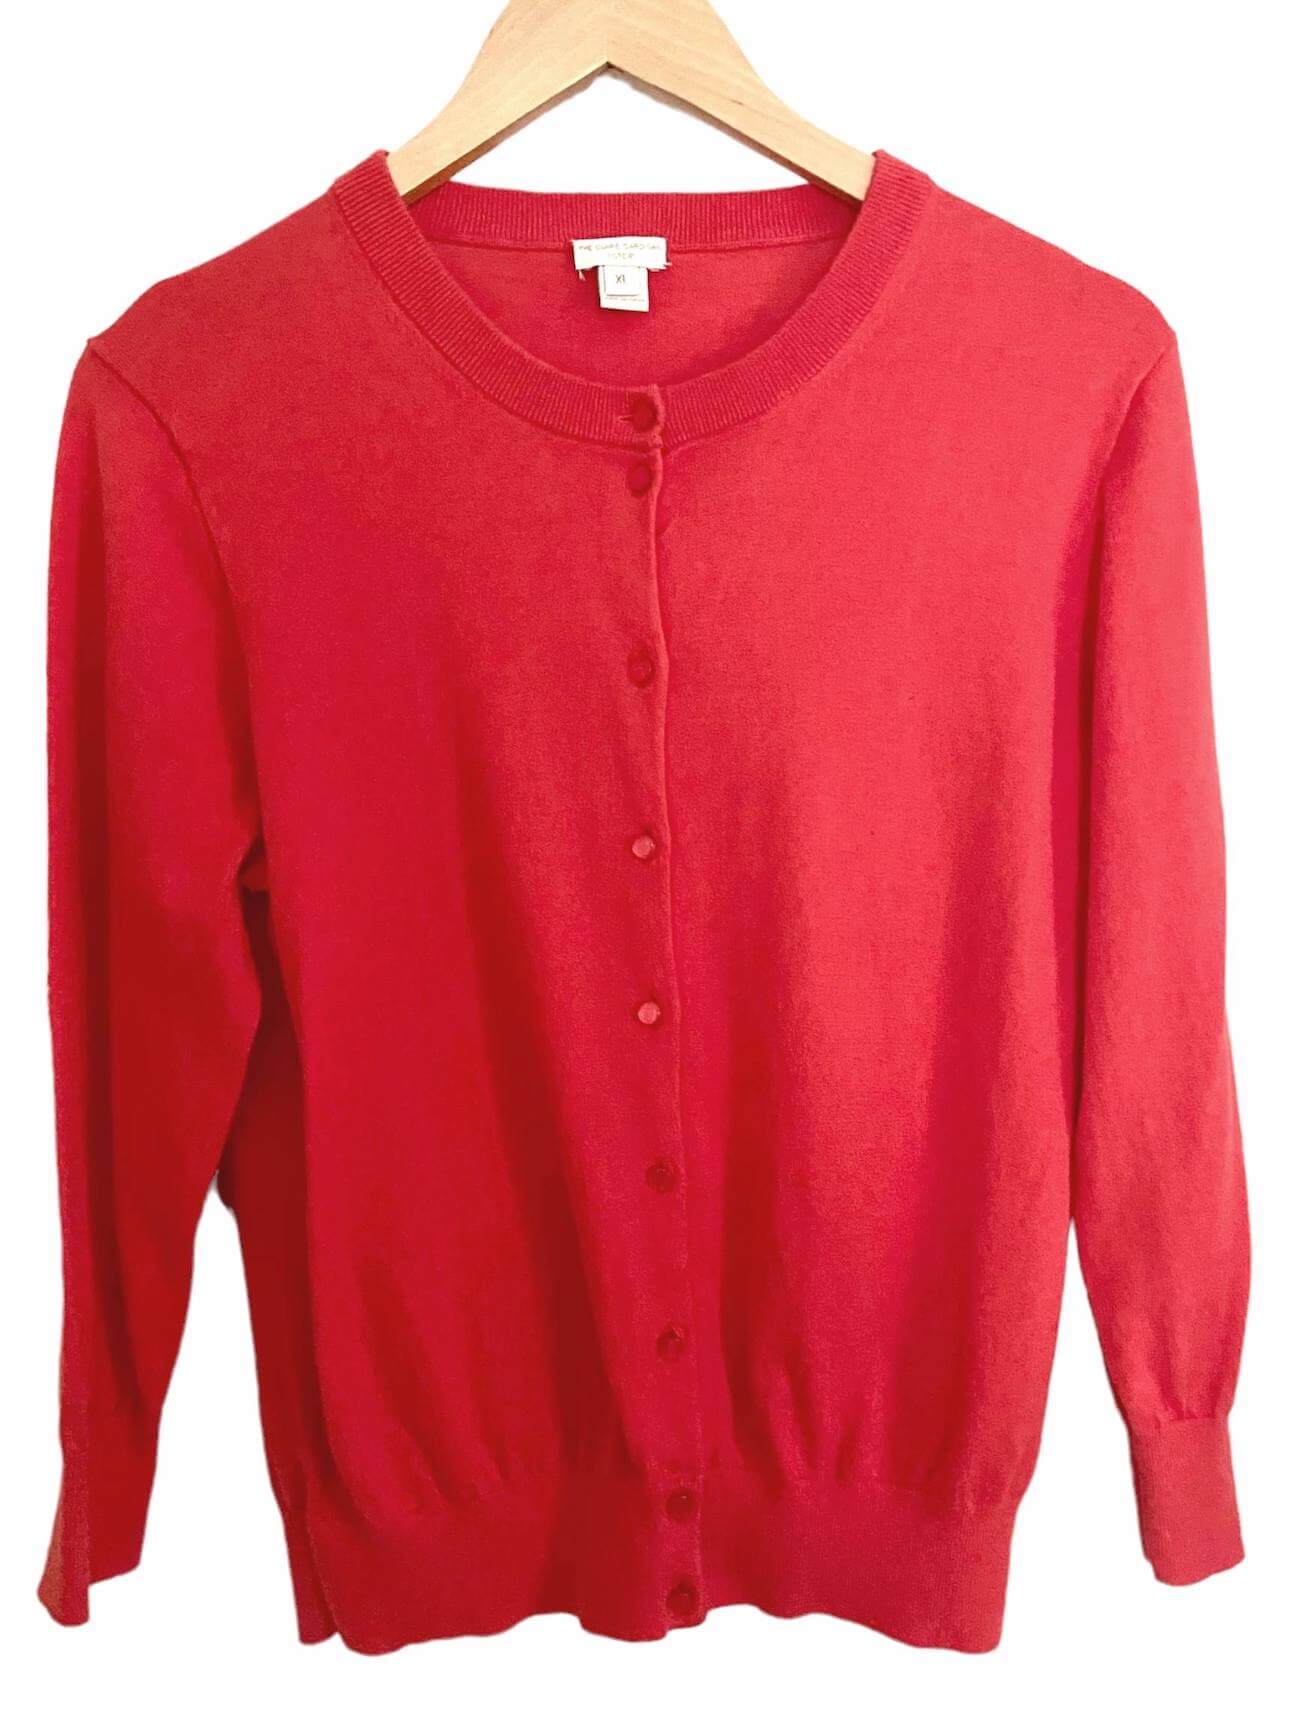 Warm Spring J.CREW red cardigan sweater